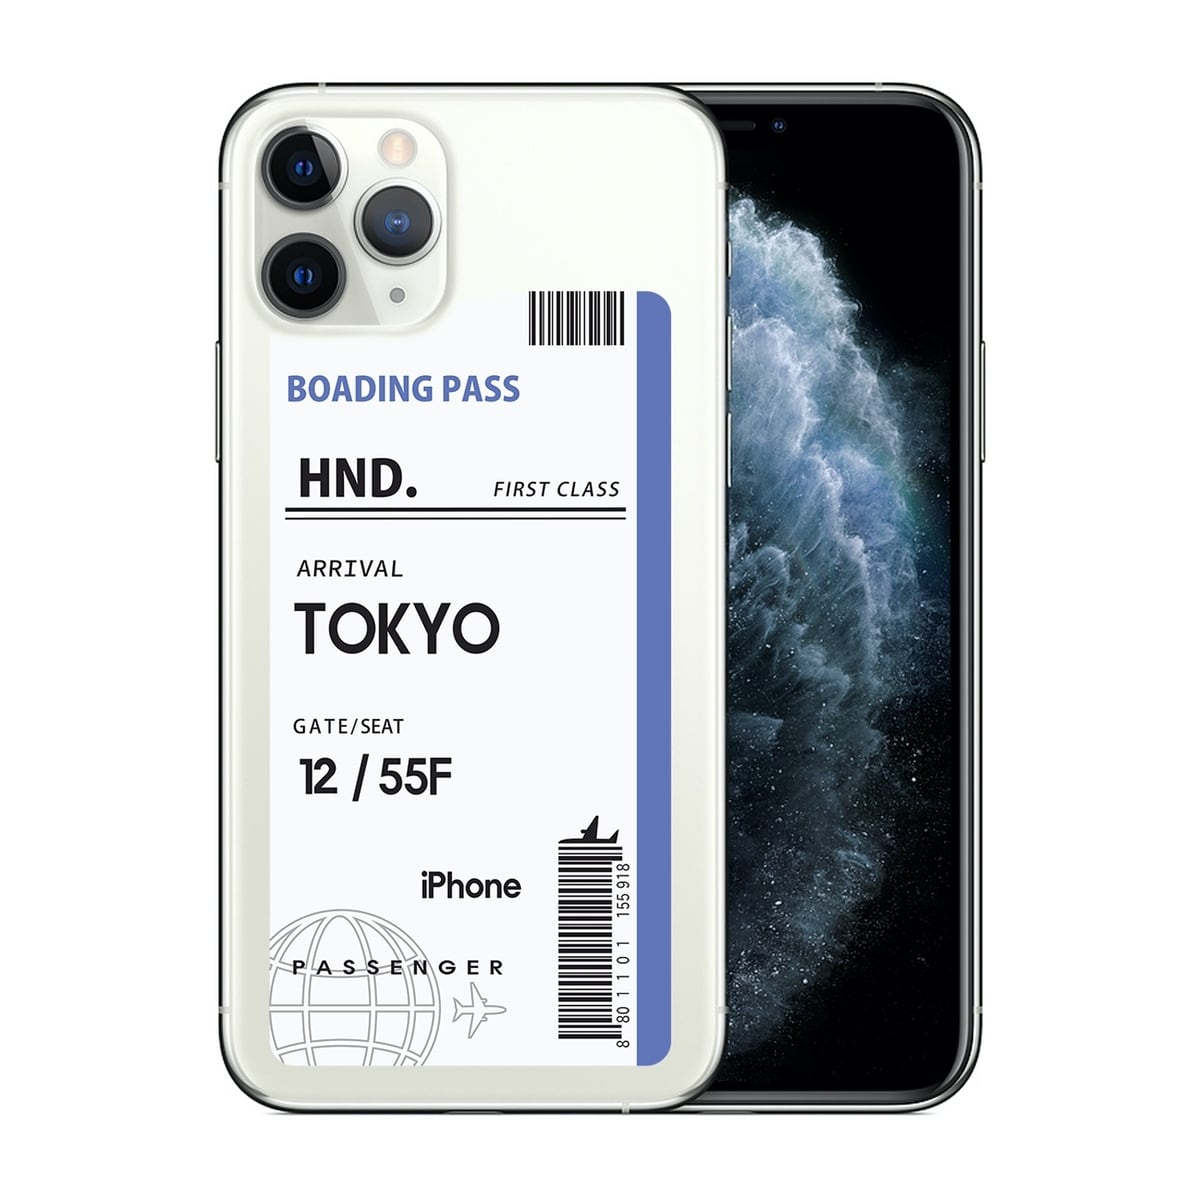 iphone14pro ケース 韓国 チケット 航空券 クリア 透明 iPhoneケース 携帯ケース 携帯カバー スマホケース case 傷防止  汚れ防止 メンズ レディース お揃い ペア セレクトショップオンリーユー